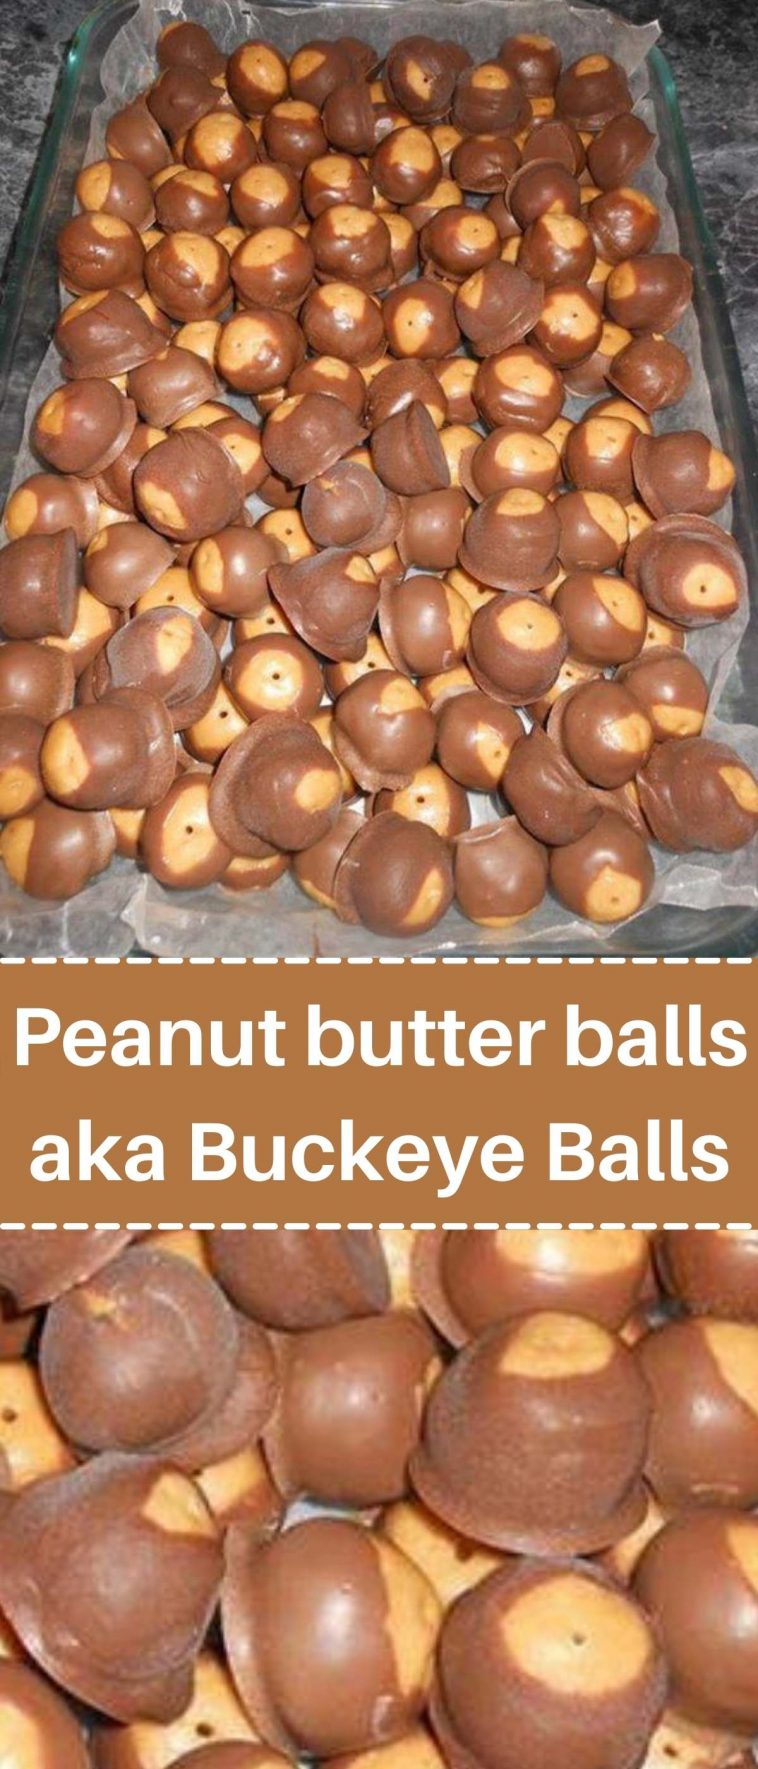 Peanut butter balls aka Buckeye Balls